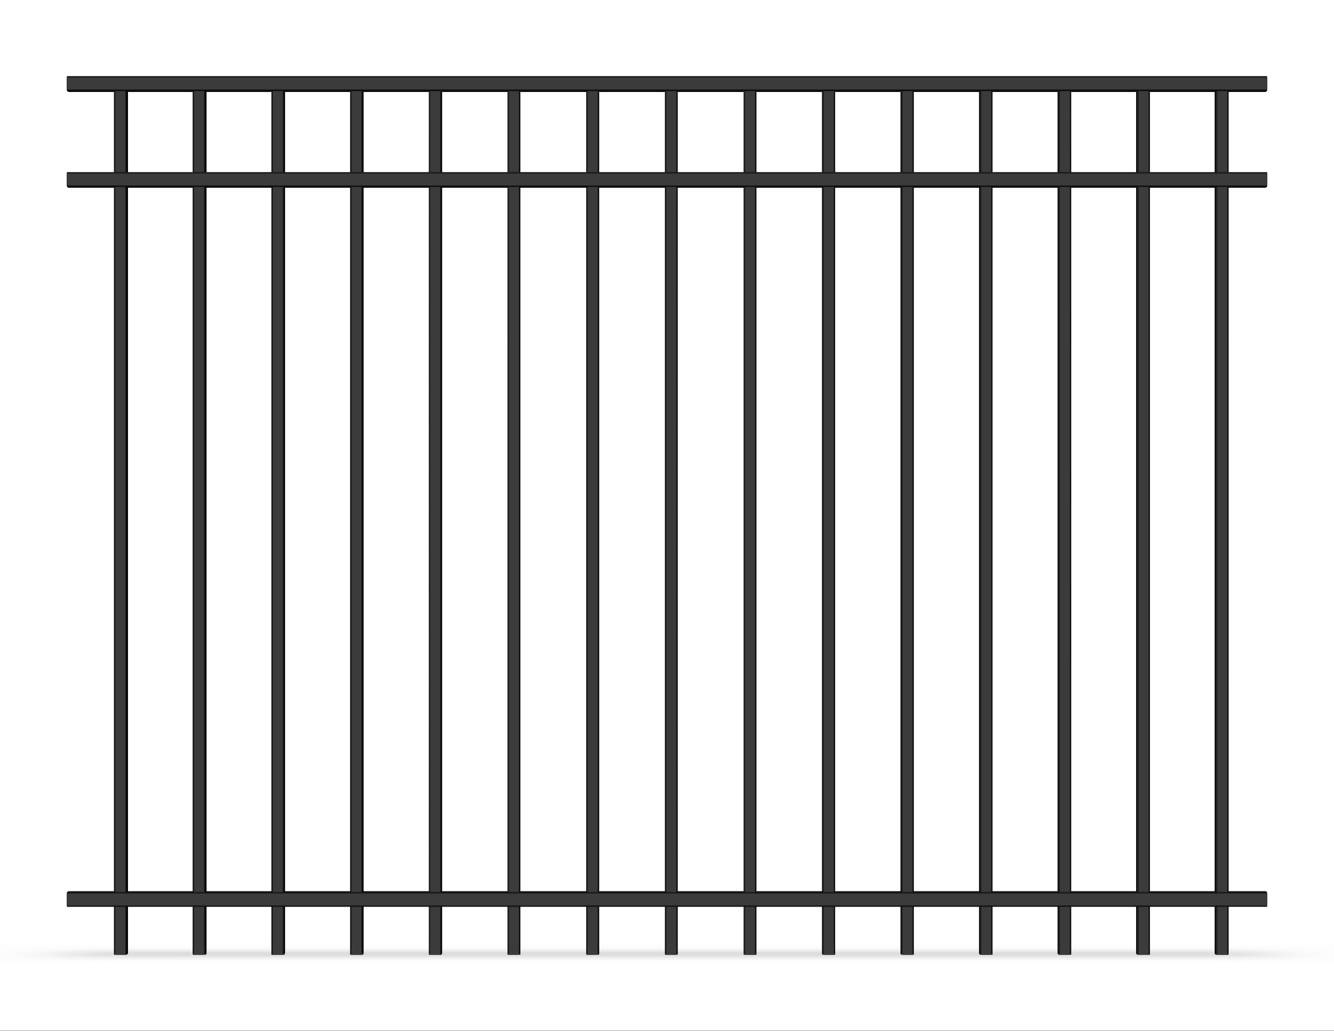 Steel Picket Fence, Ornamental Security Fencing